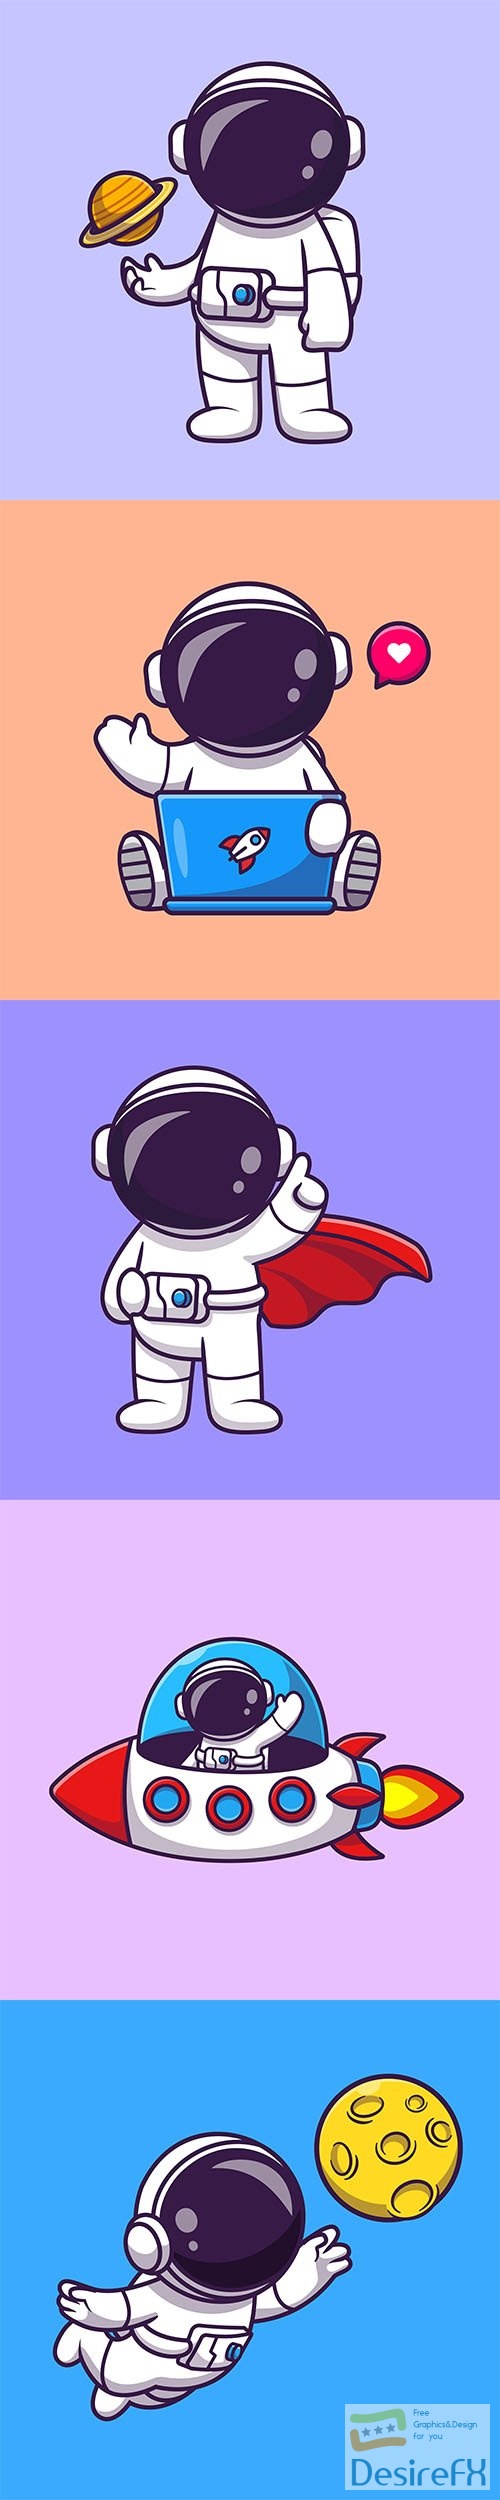 Cute astronaut catching moon cartoon vector illustrations